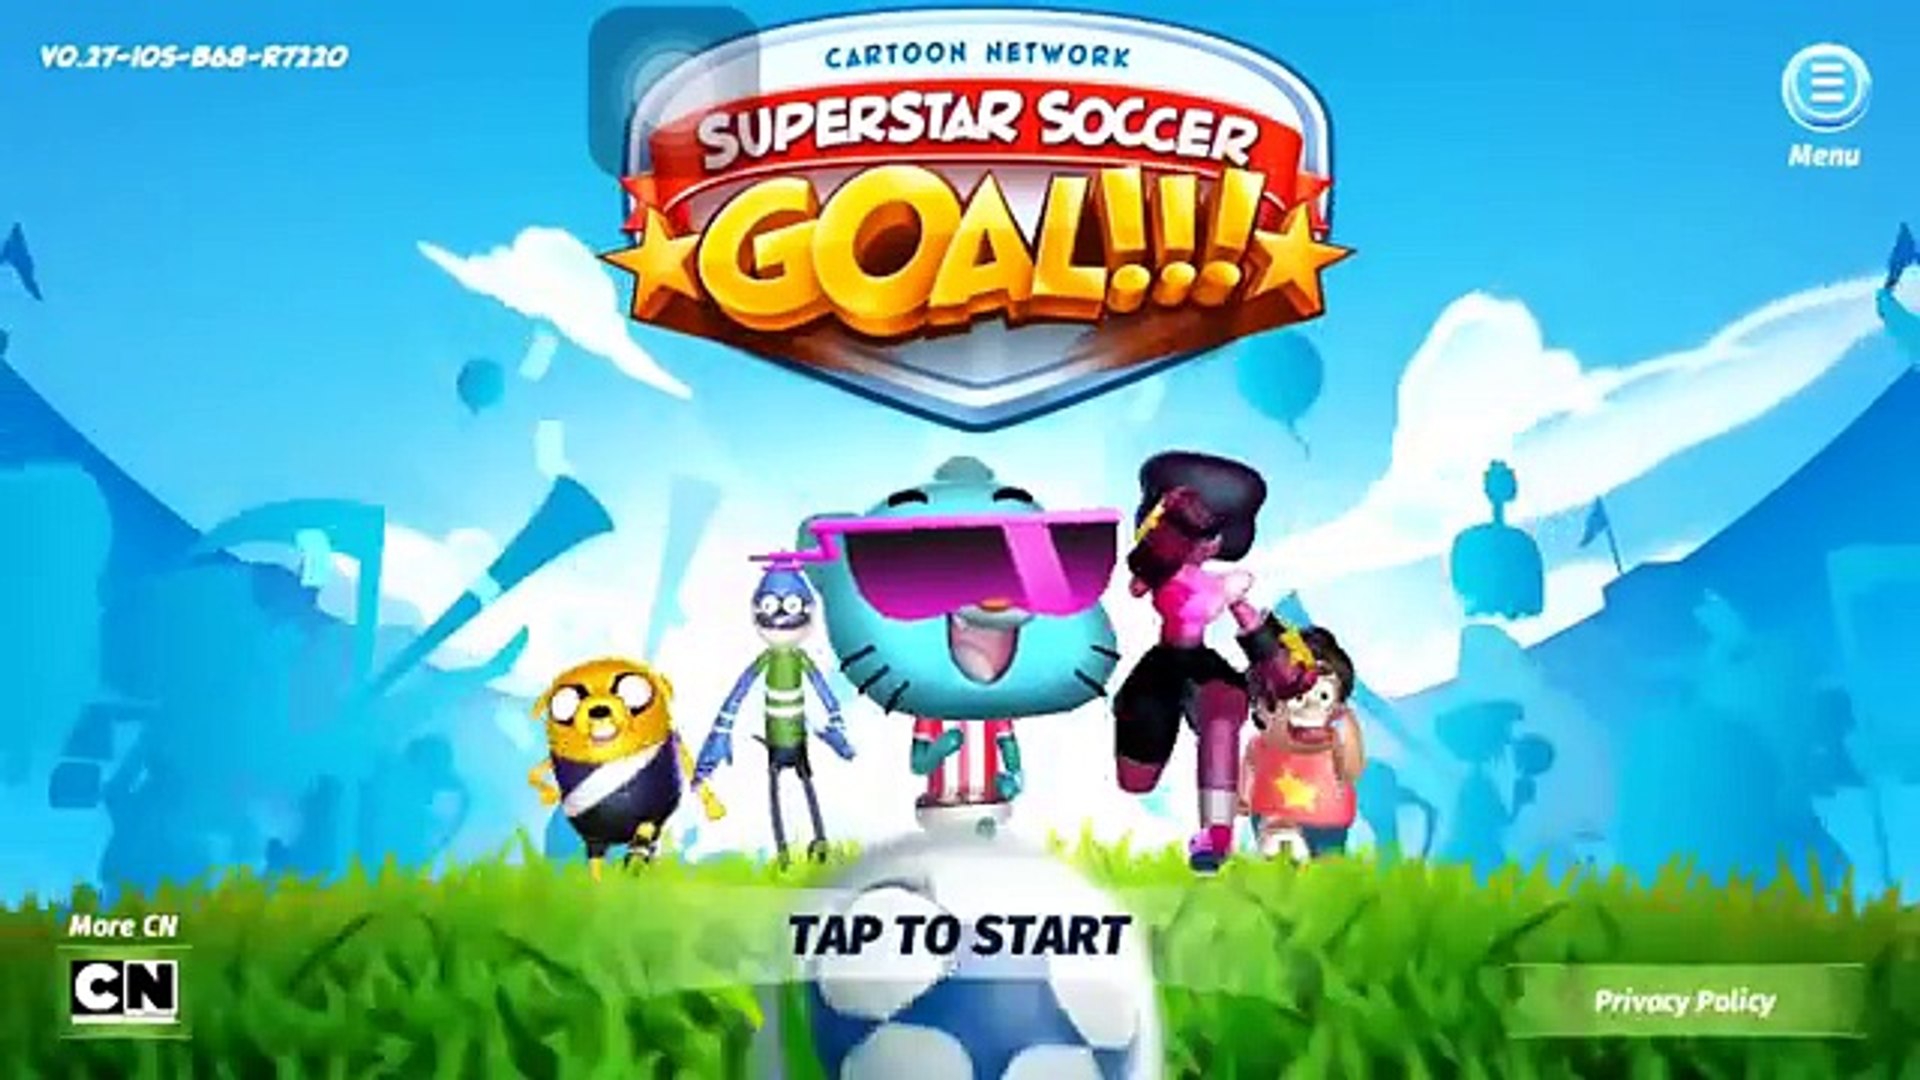 ⁣Cartoon Network Superstar Soccer Goal - UNCLE GRANDPA TEAM - UNCLE GRANDPAS GOLD TROPHY